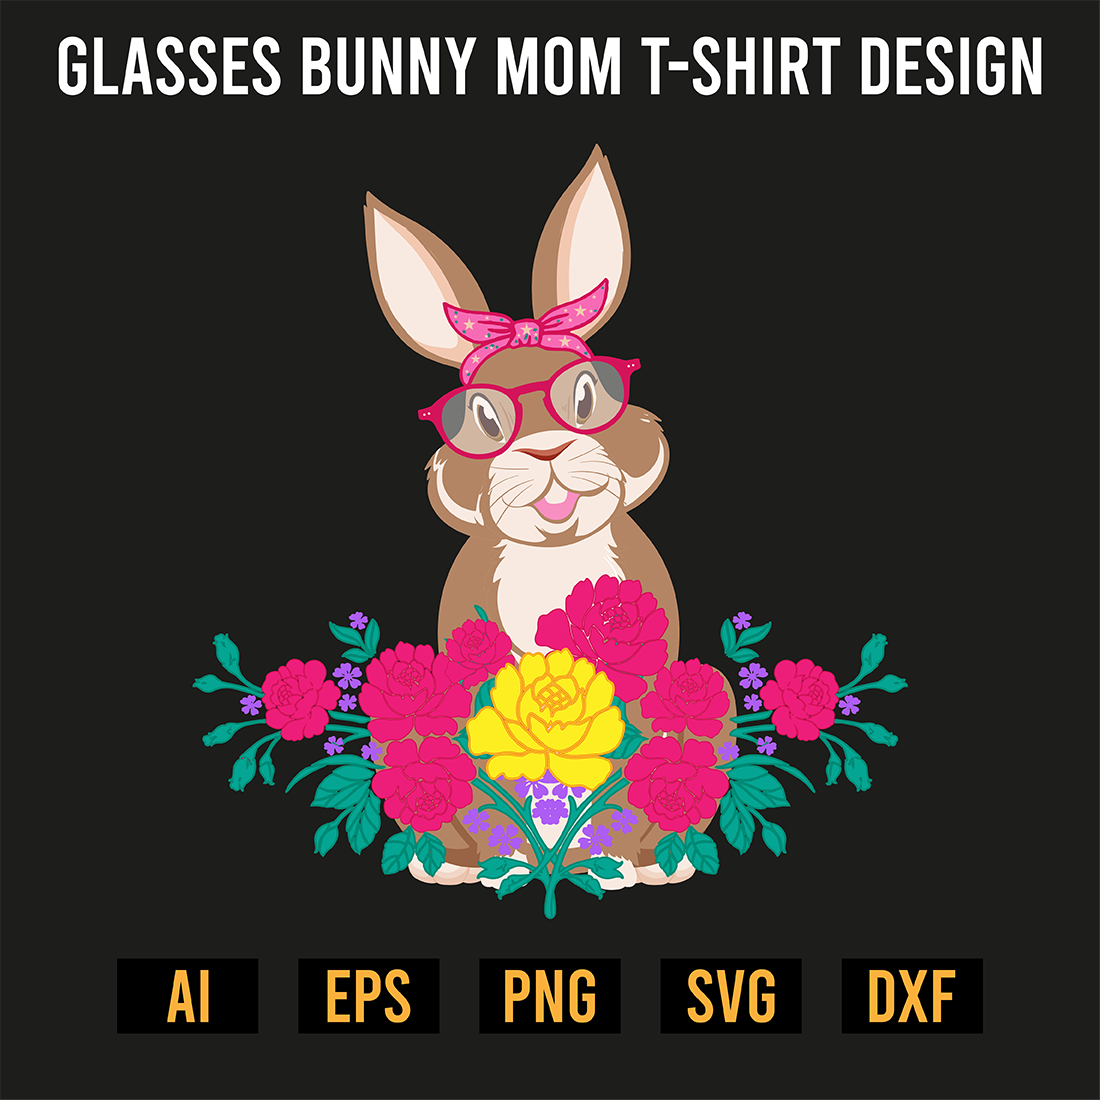 Glasses Bunny Mom T-Shirt Design preview image.